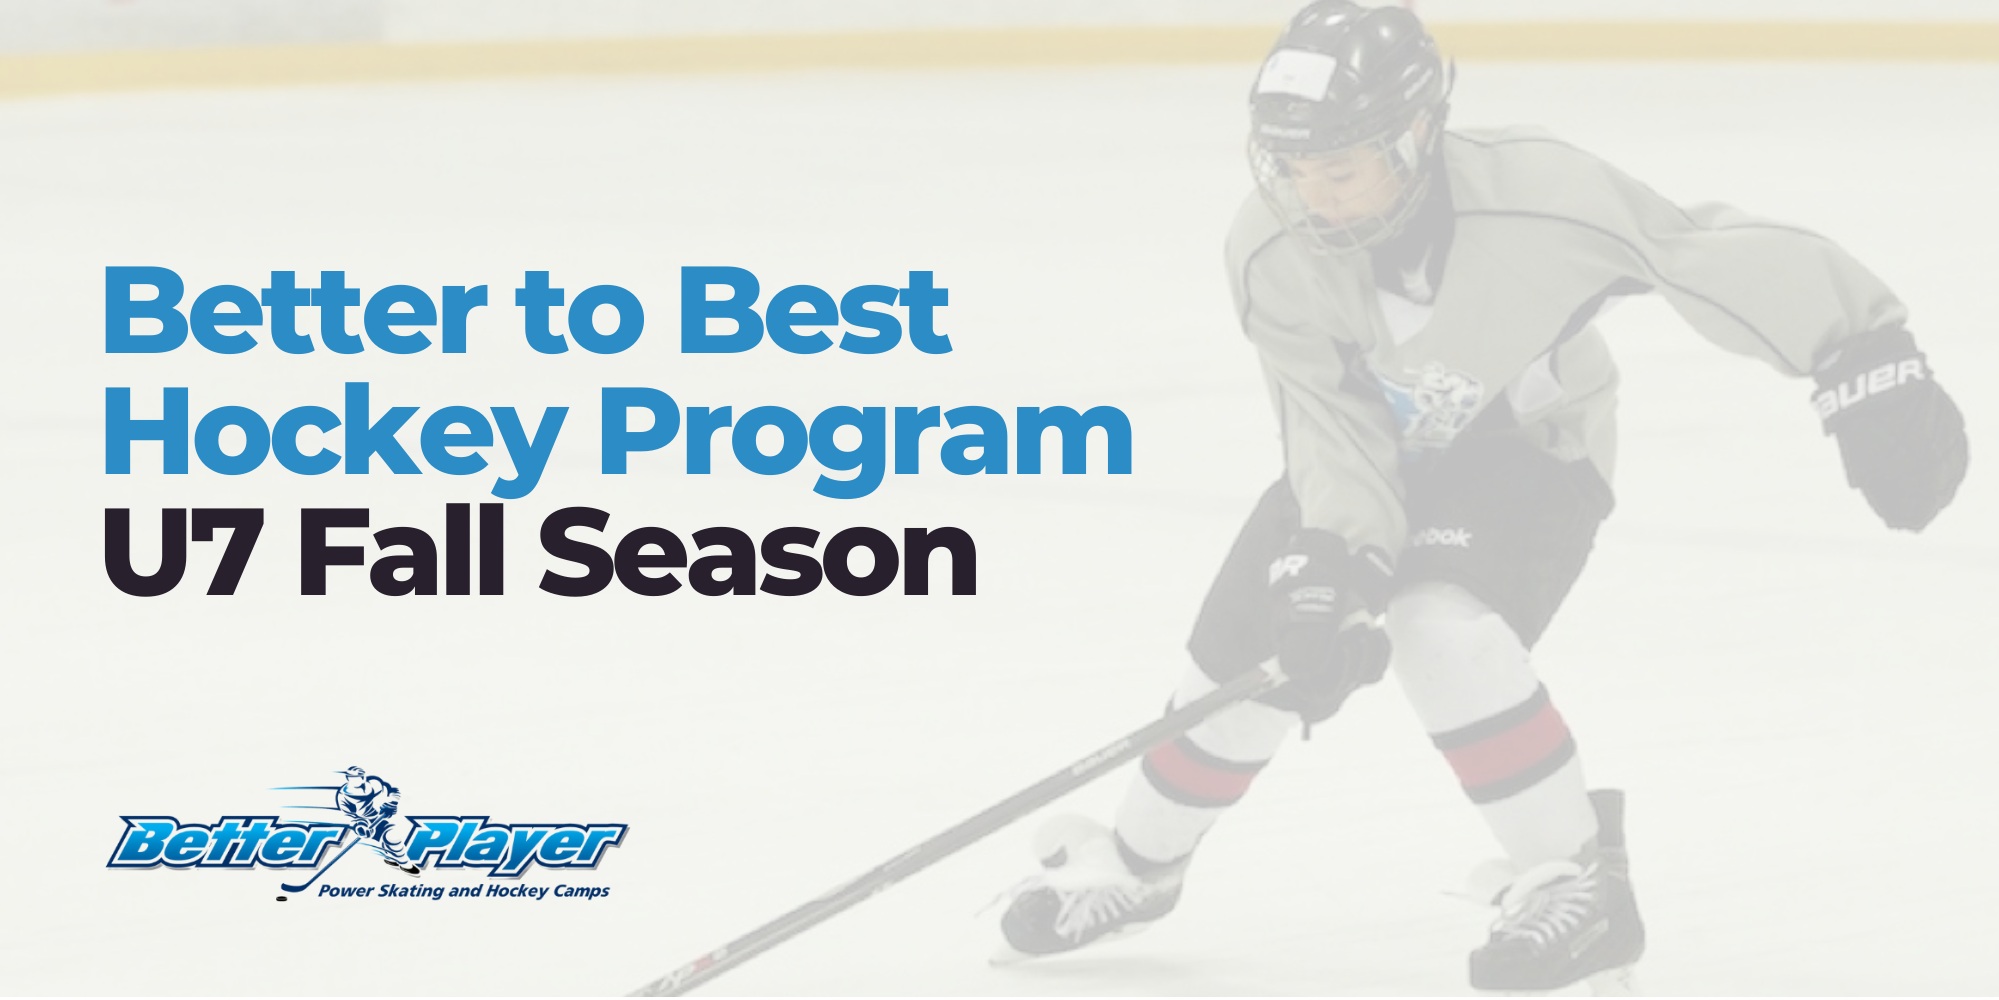 U7 Fall Season | Better to Best Hockey Program